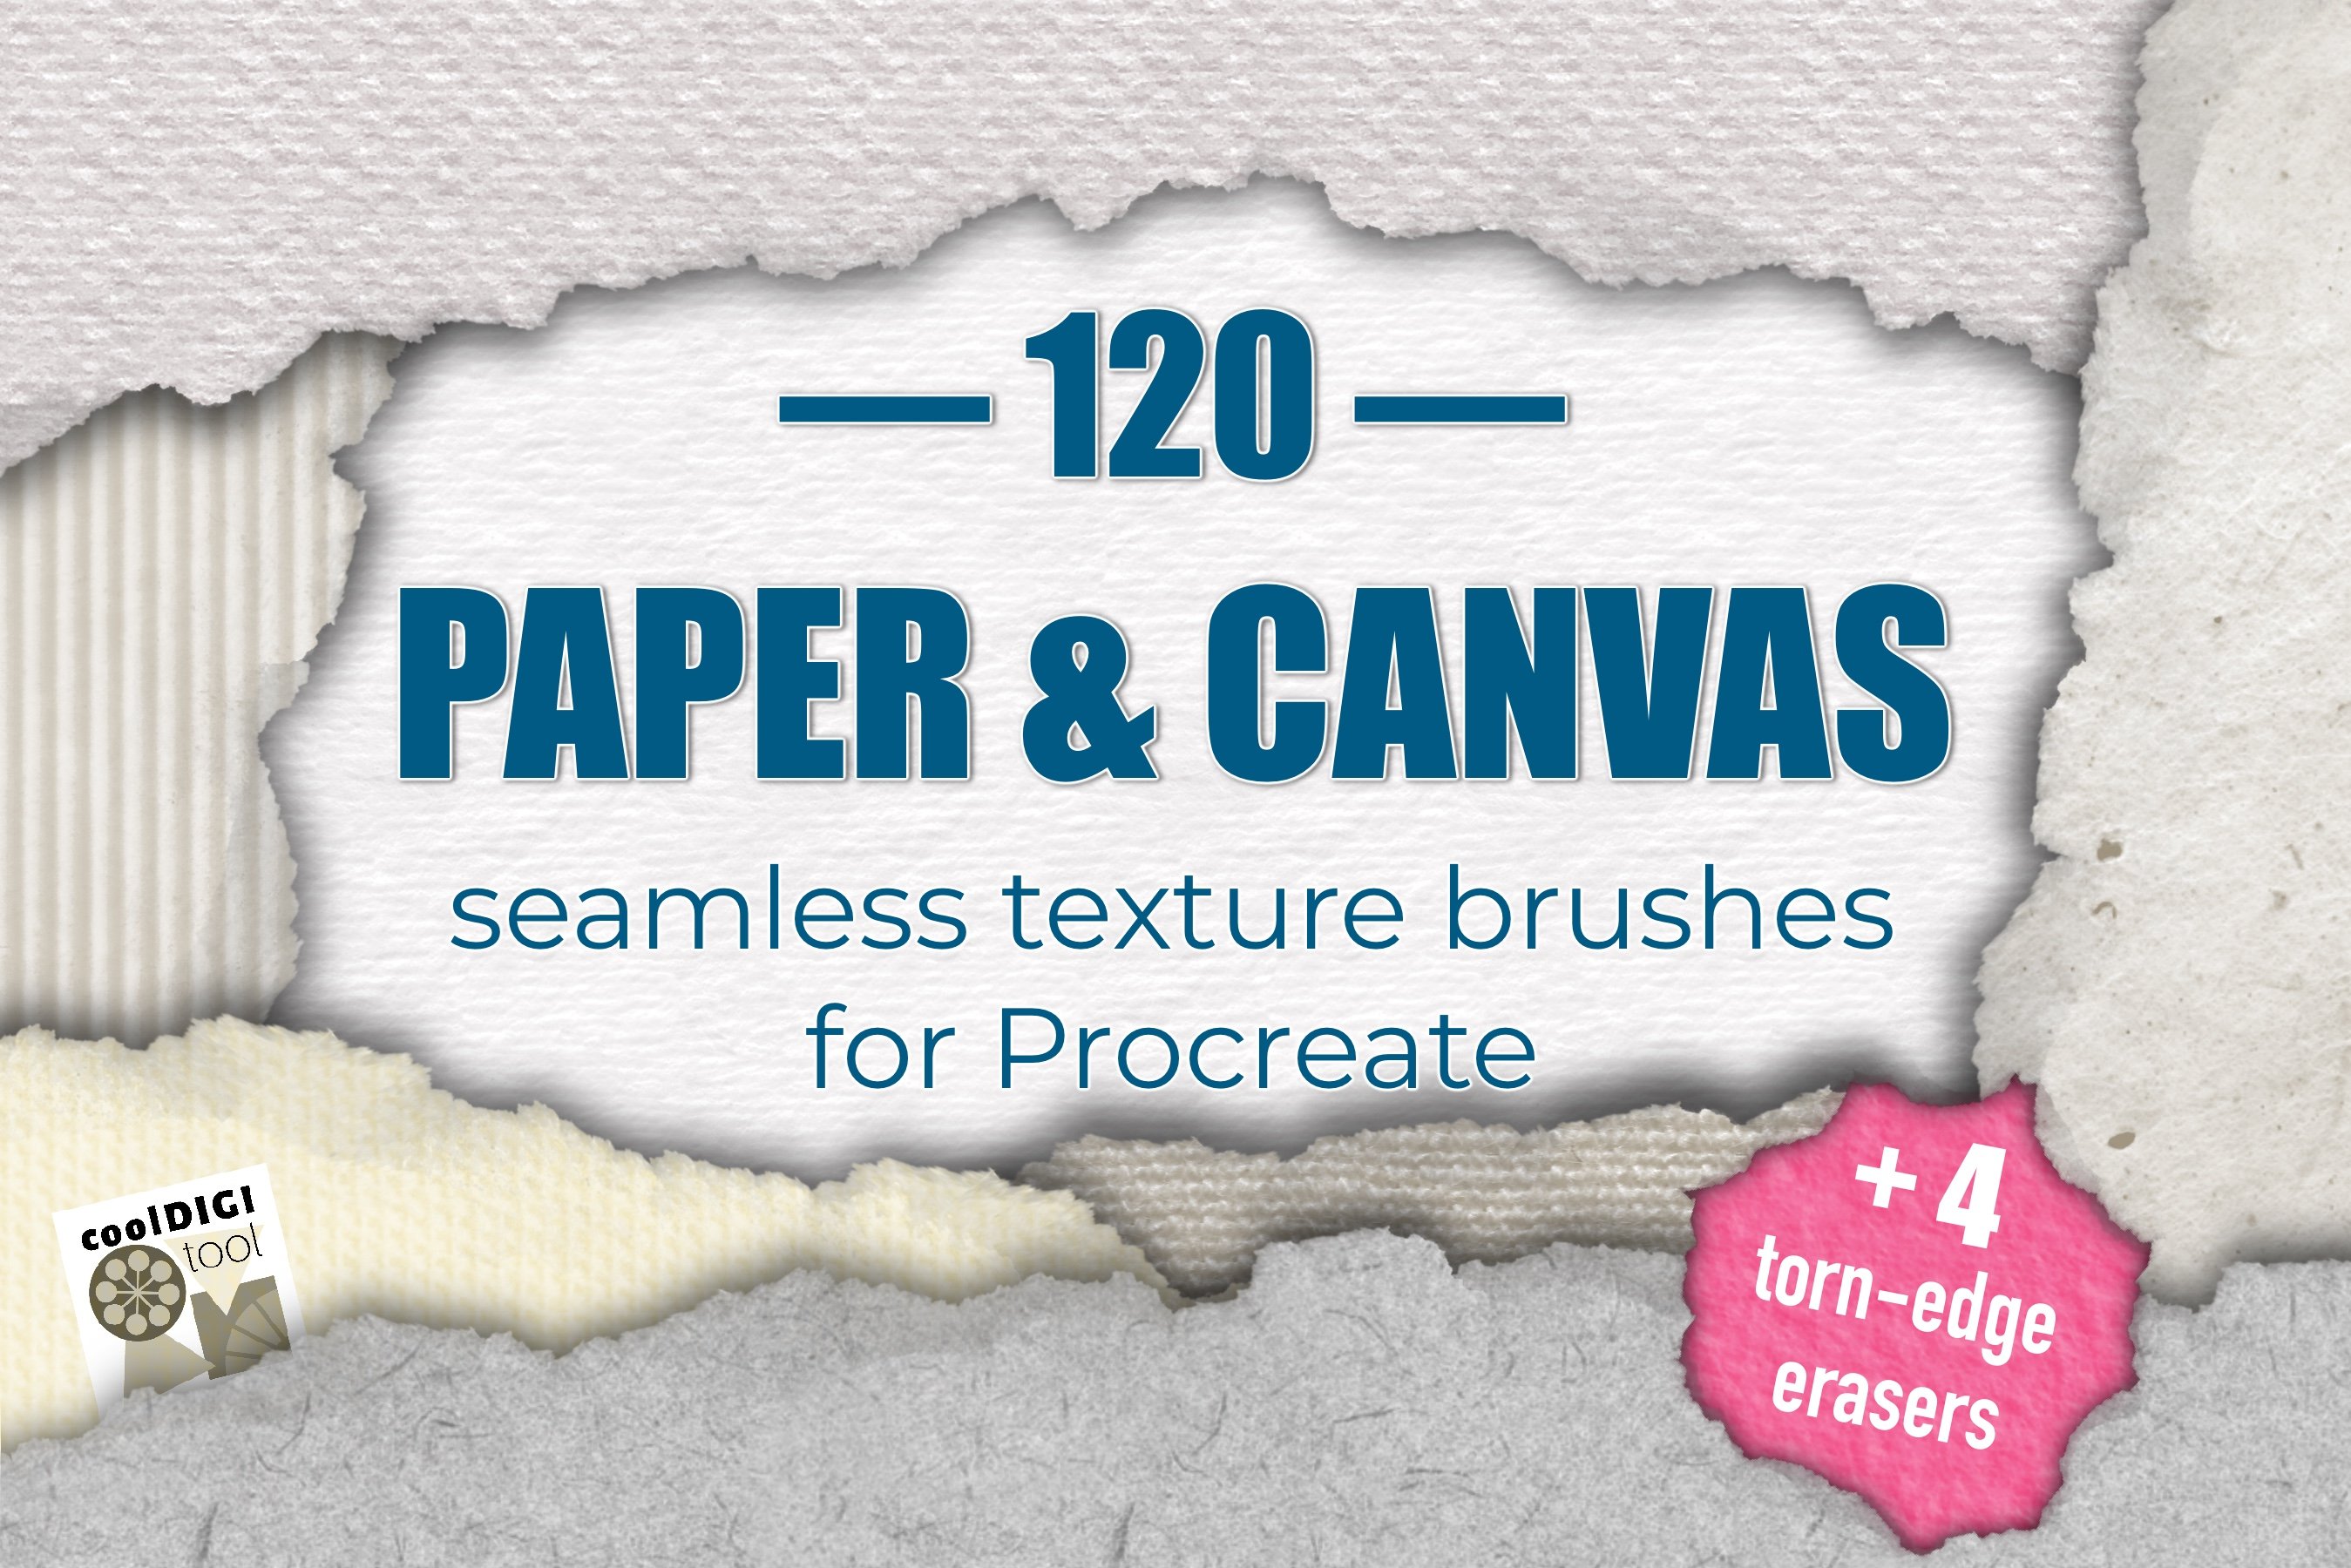 Procreate Paper Canvases - Design Cuts